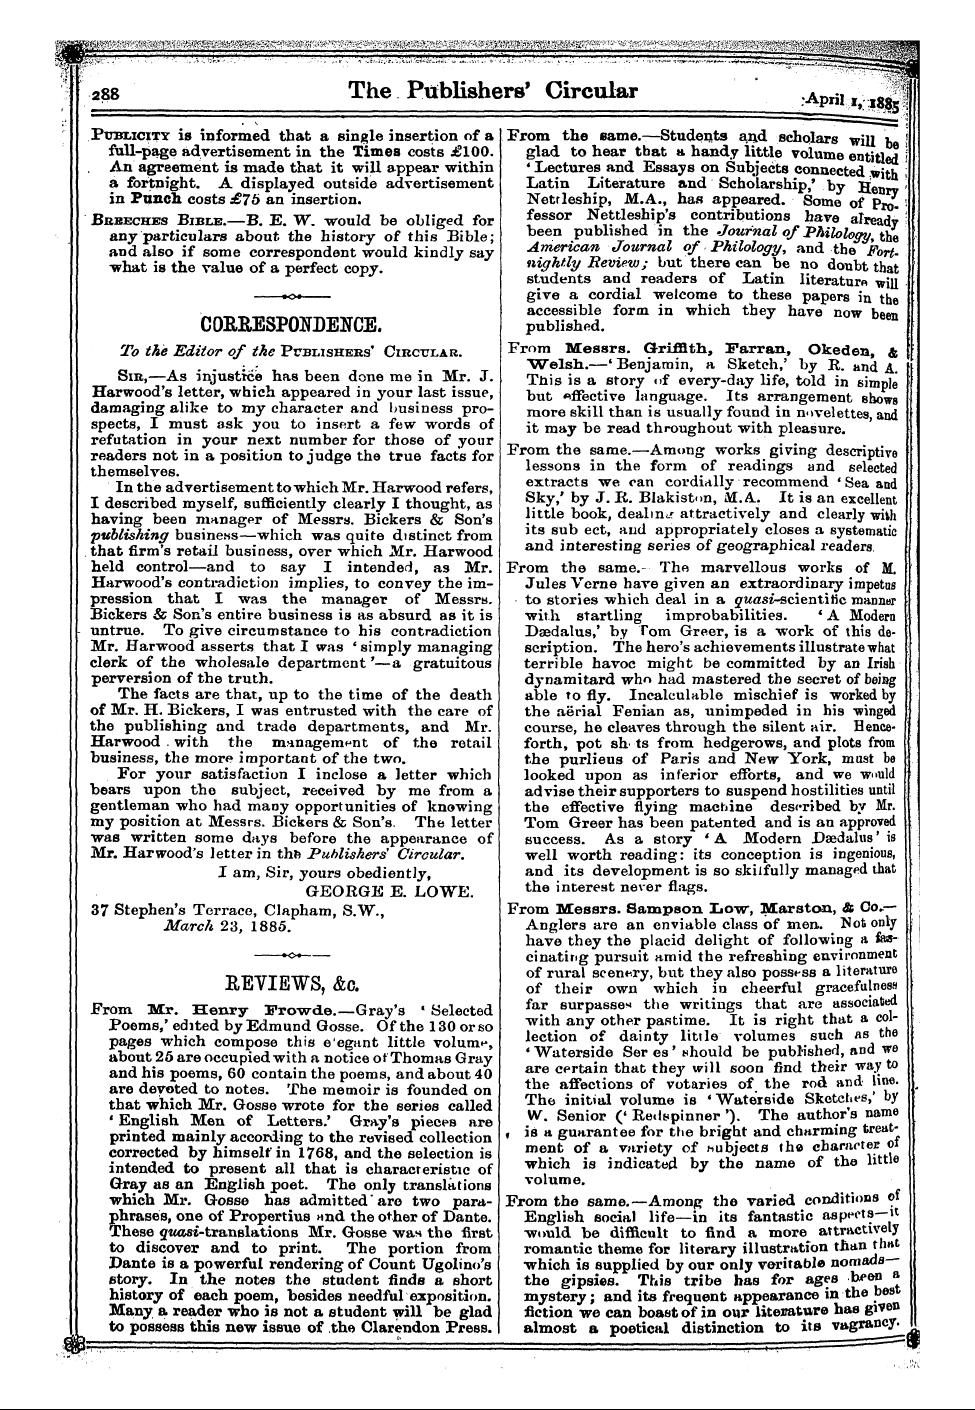 Publishers’ Circular (1880-1890): jS F Y, 1st edition - Correspoifdehce.